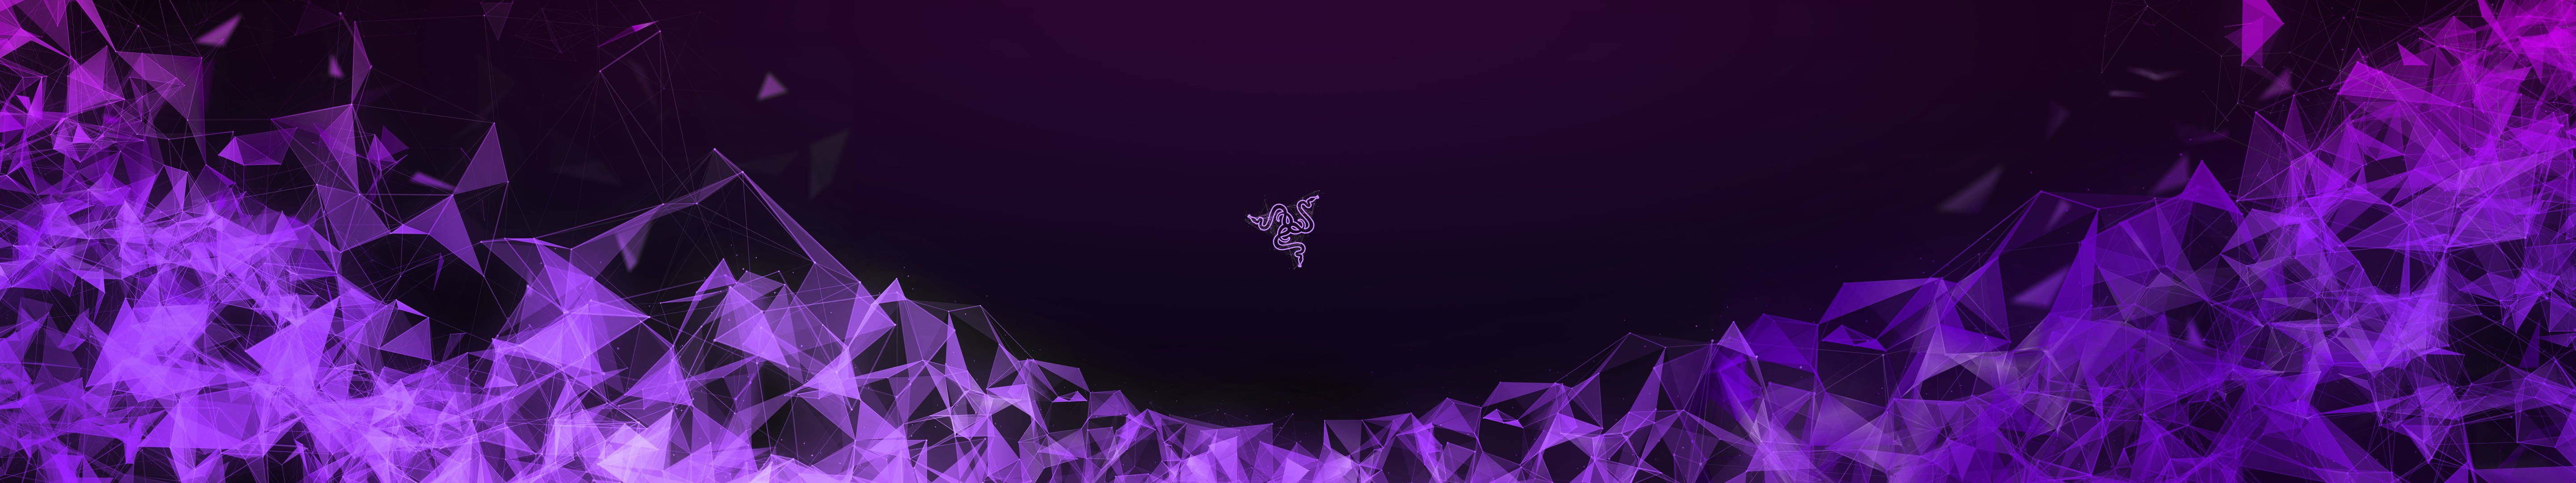 Triple Monitor Purple